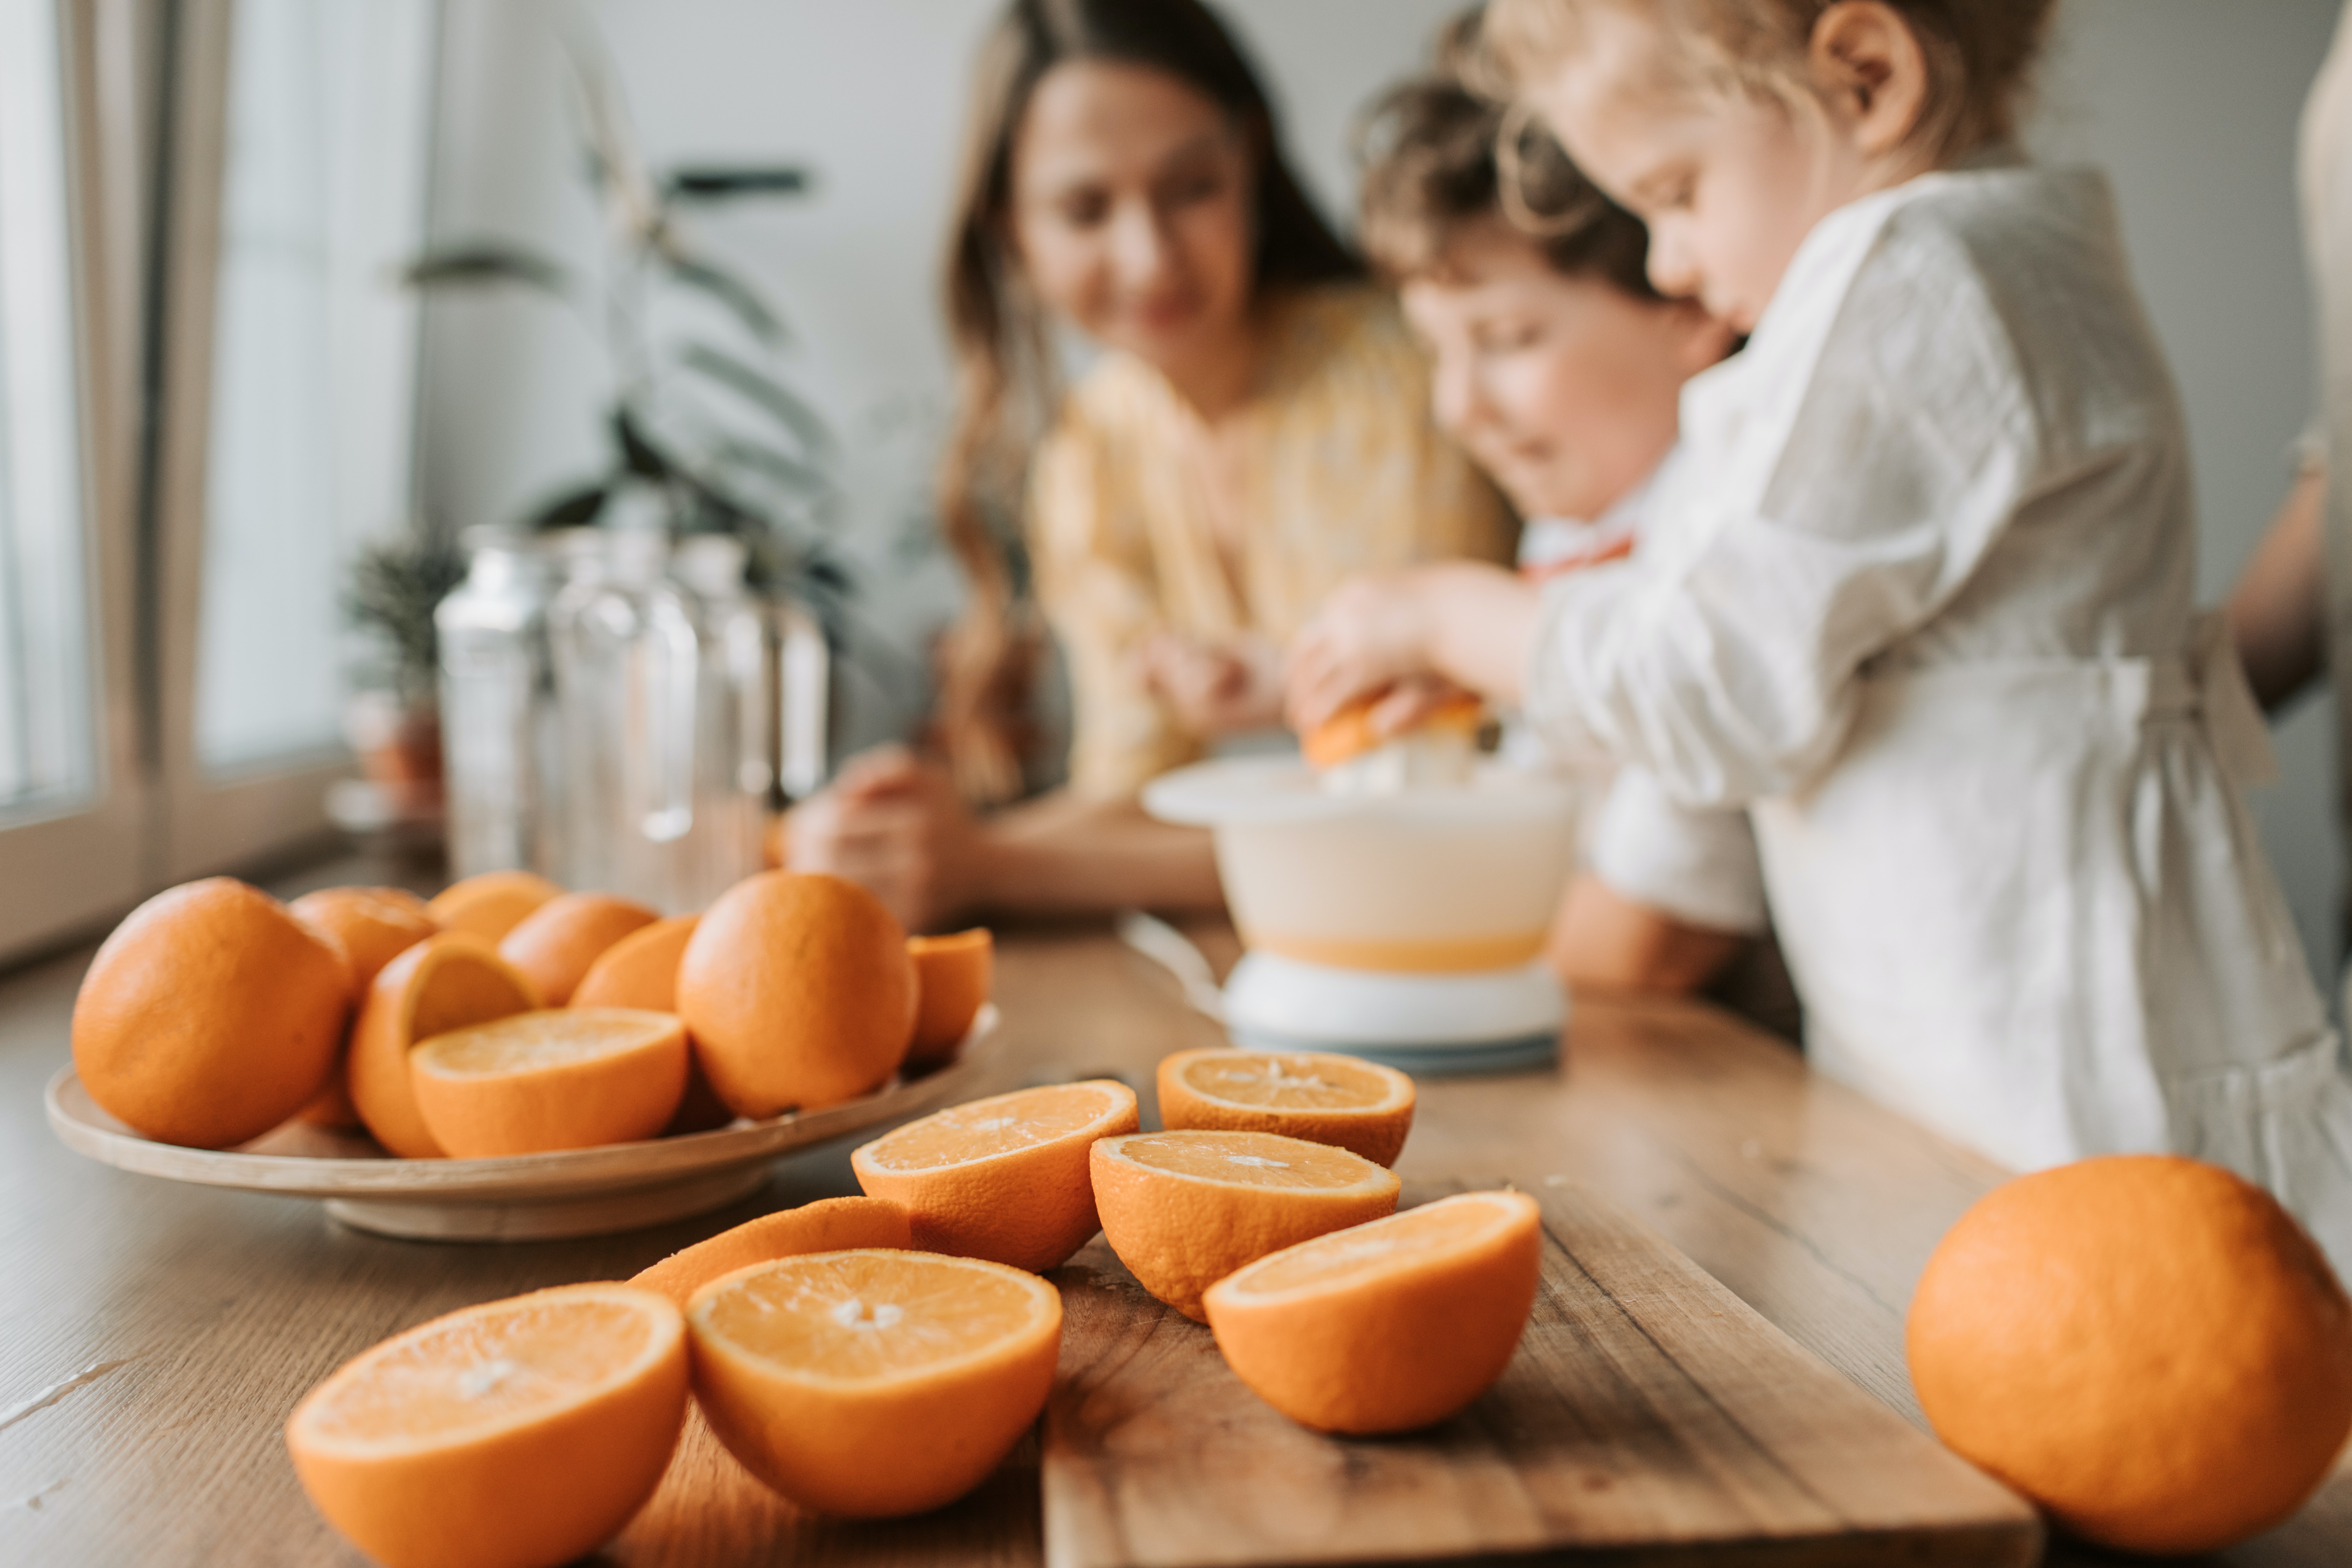 photo by vlada karpovich: https://www.pexels.com/photo/kids-making-juice-with-sliced-orange-4617258/